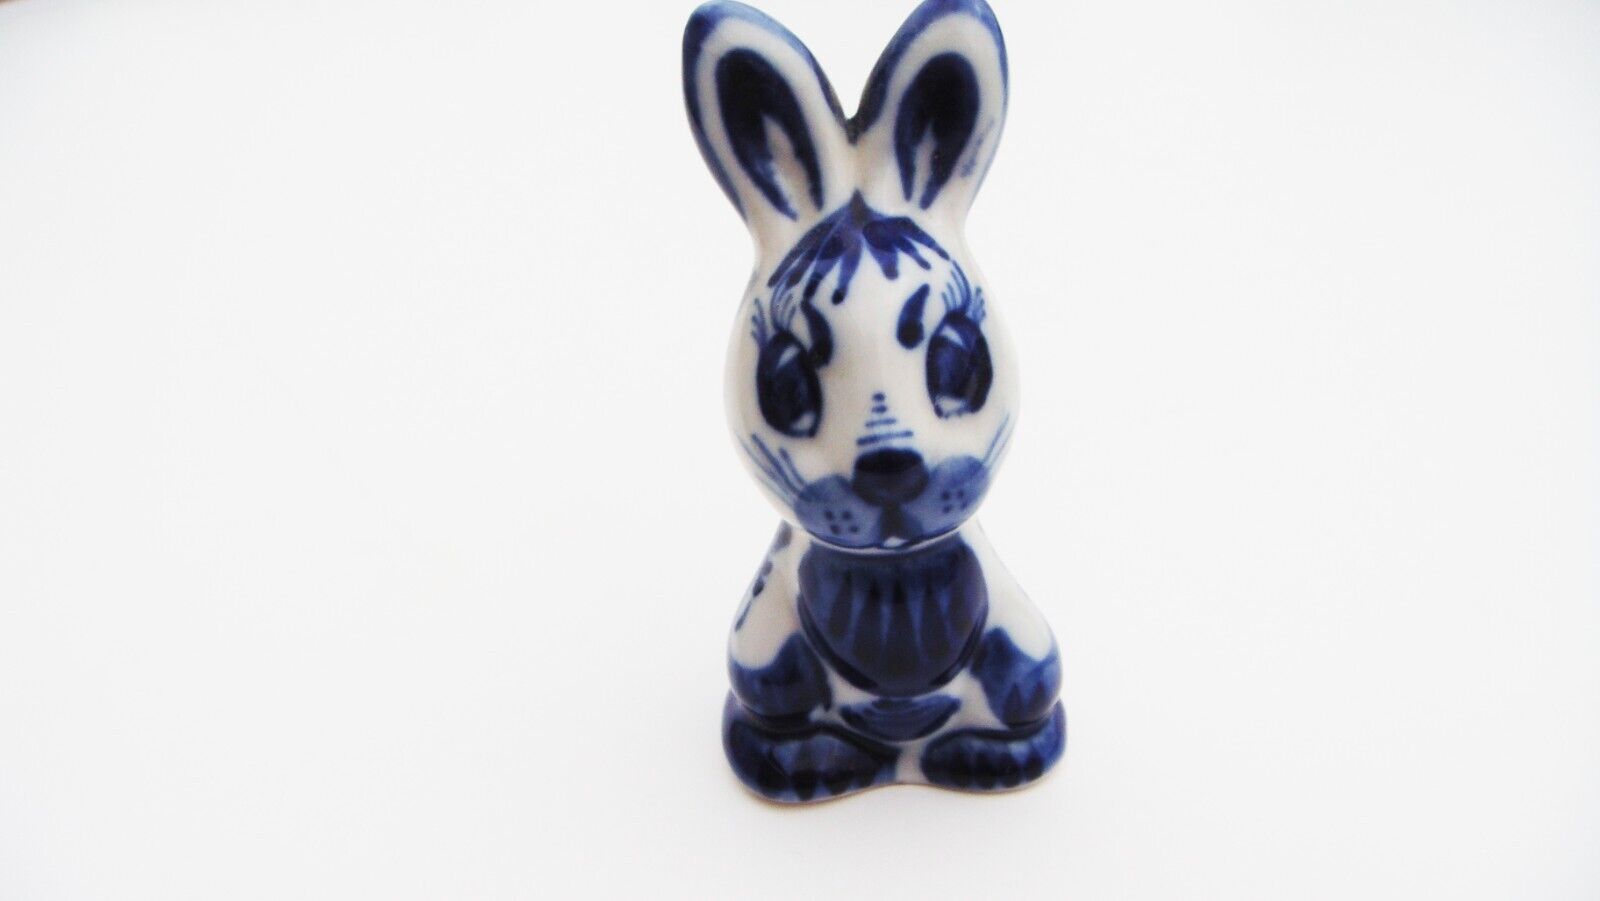 A Big Bunny gzhel porcelain figurine